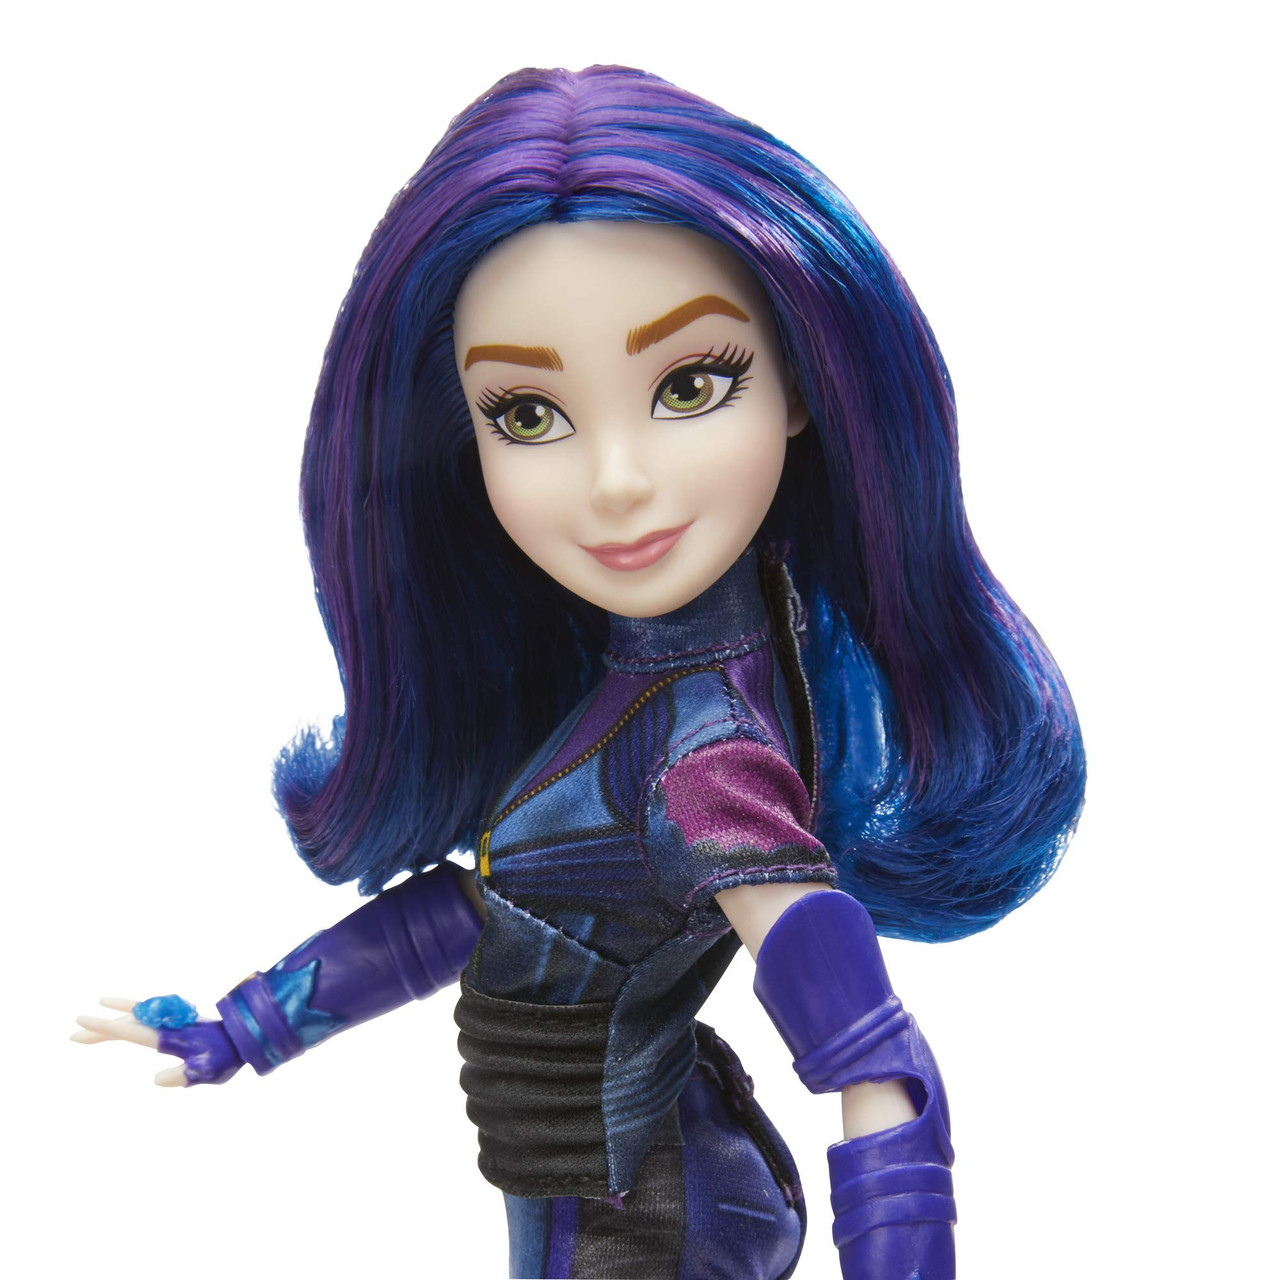 Disney's Descendants New Hasbro Doll Line Review - Descendant 2 Dolls